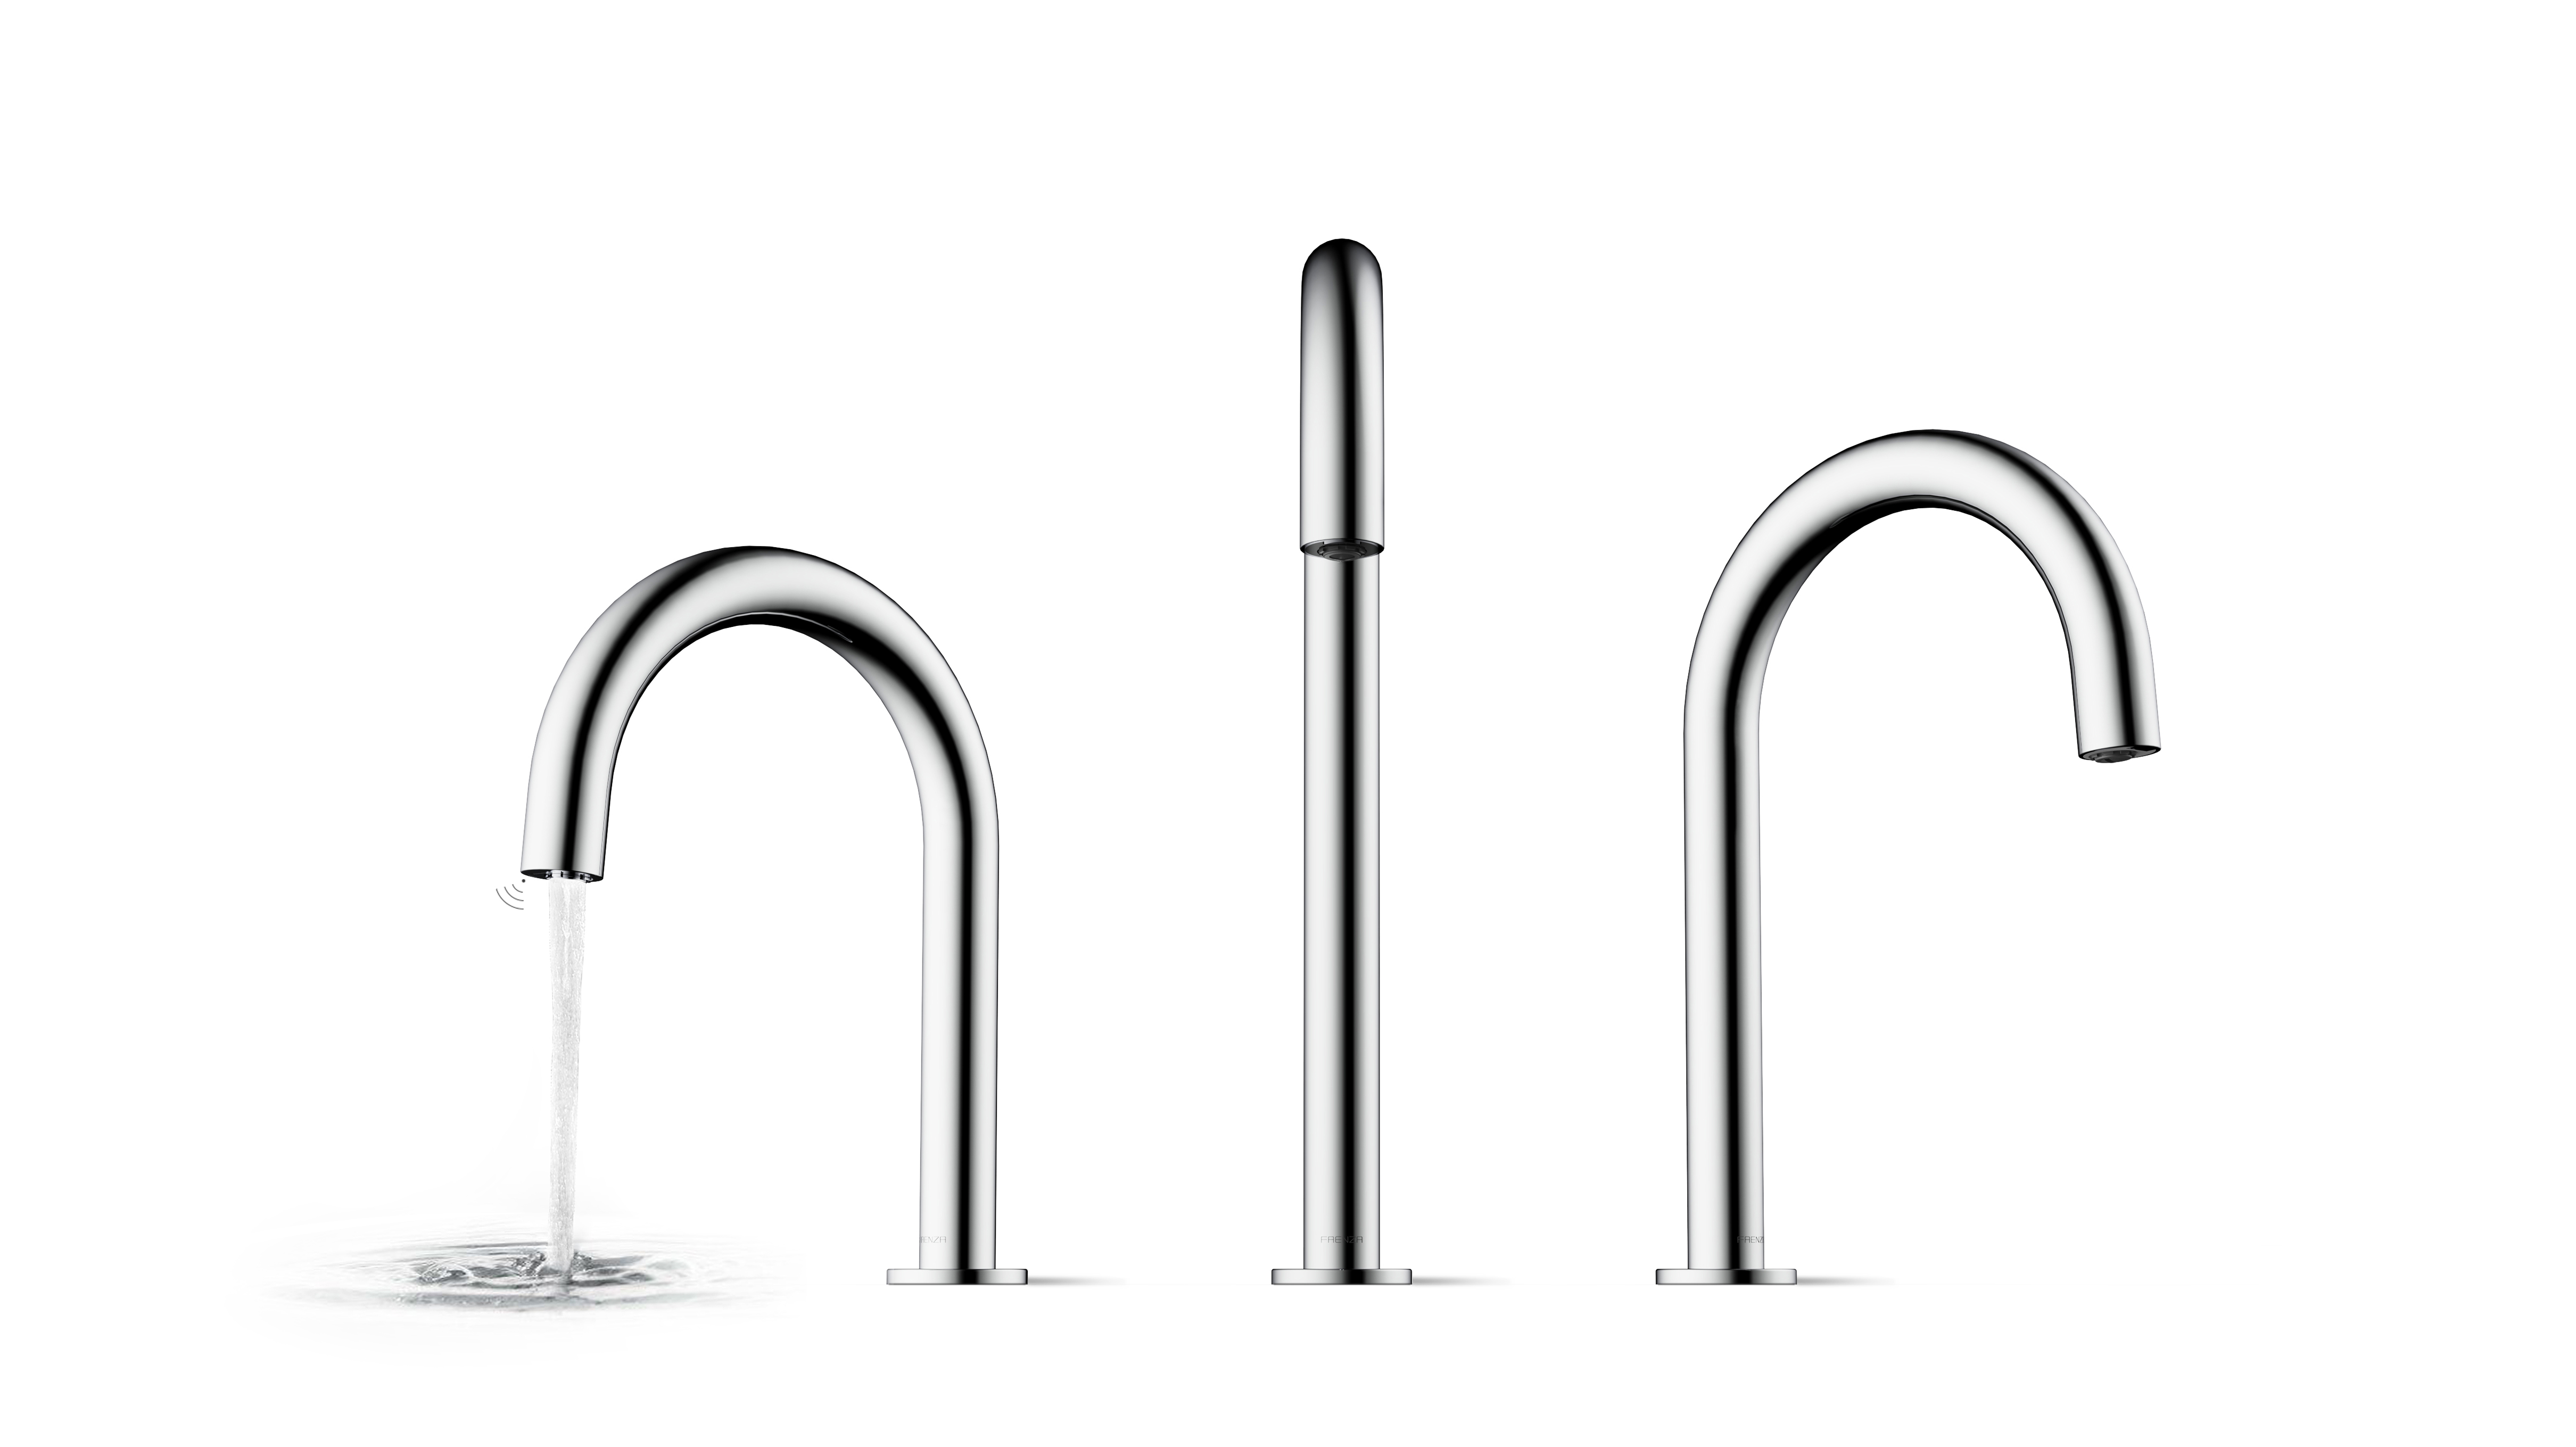 Flex series faucets